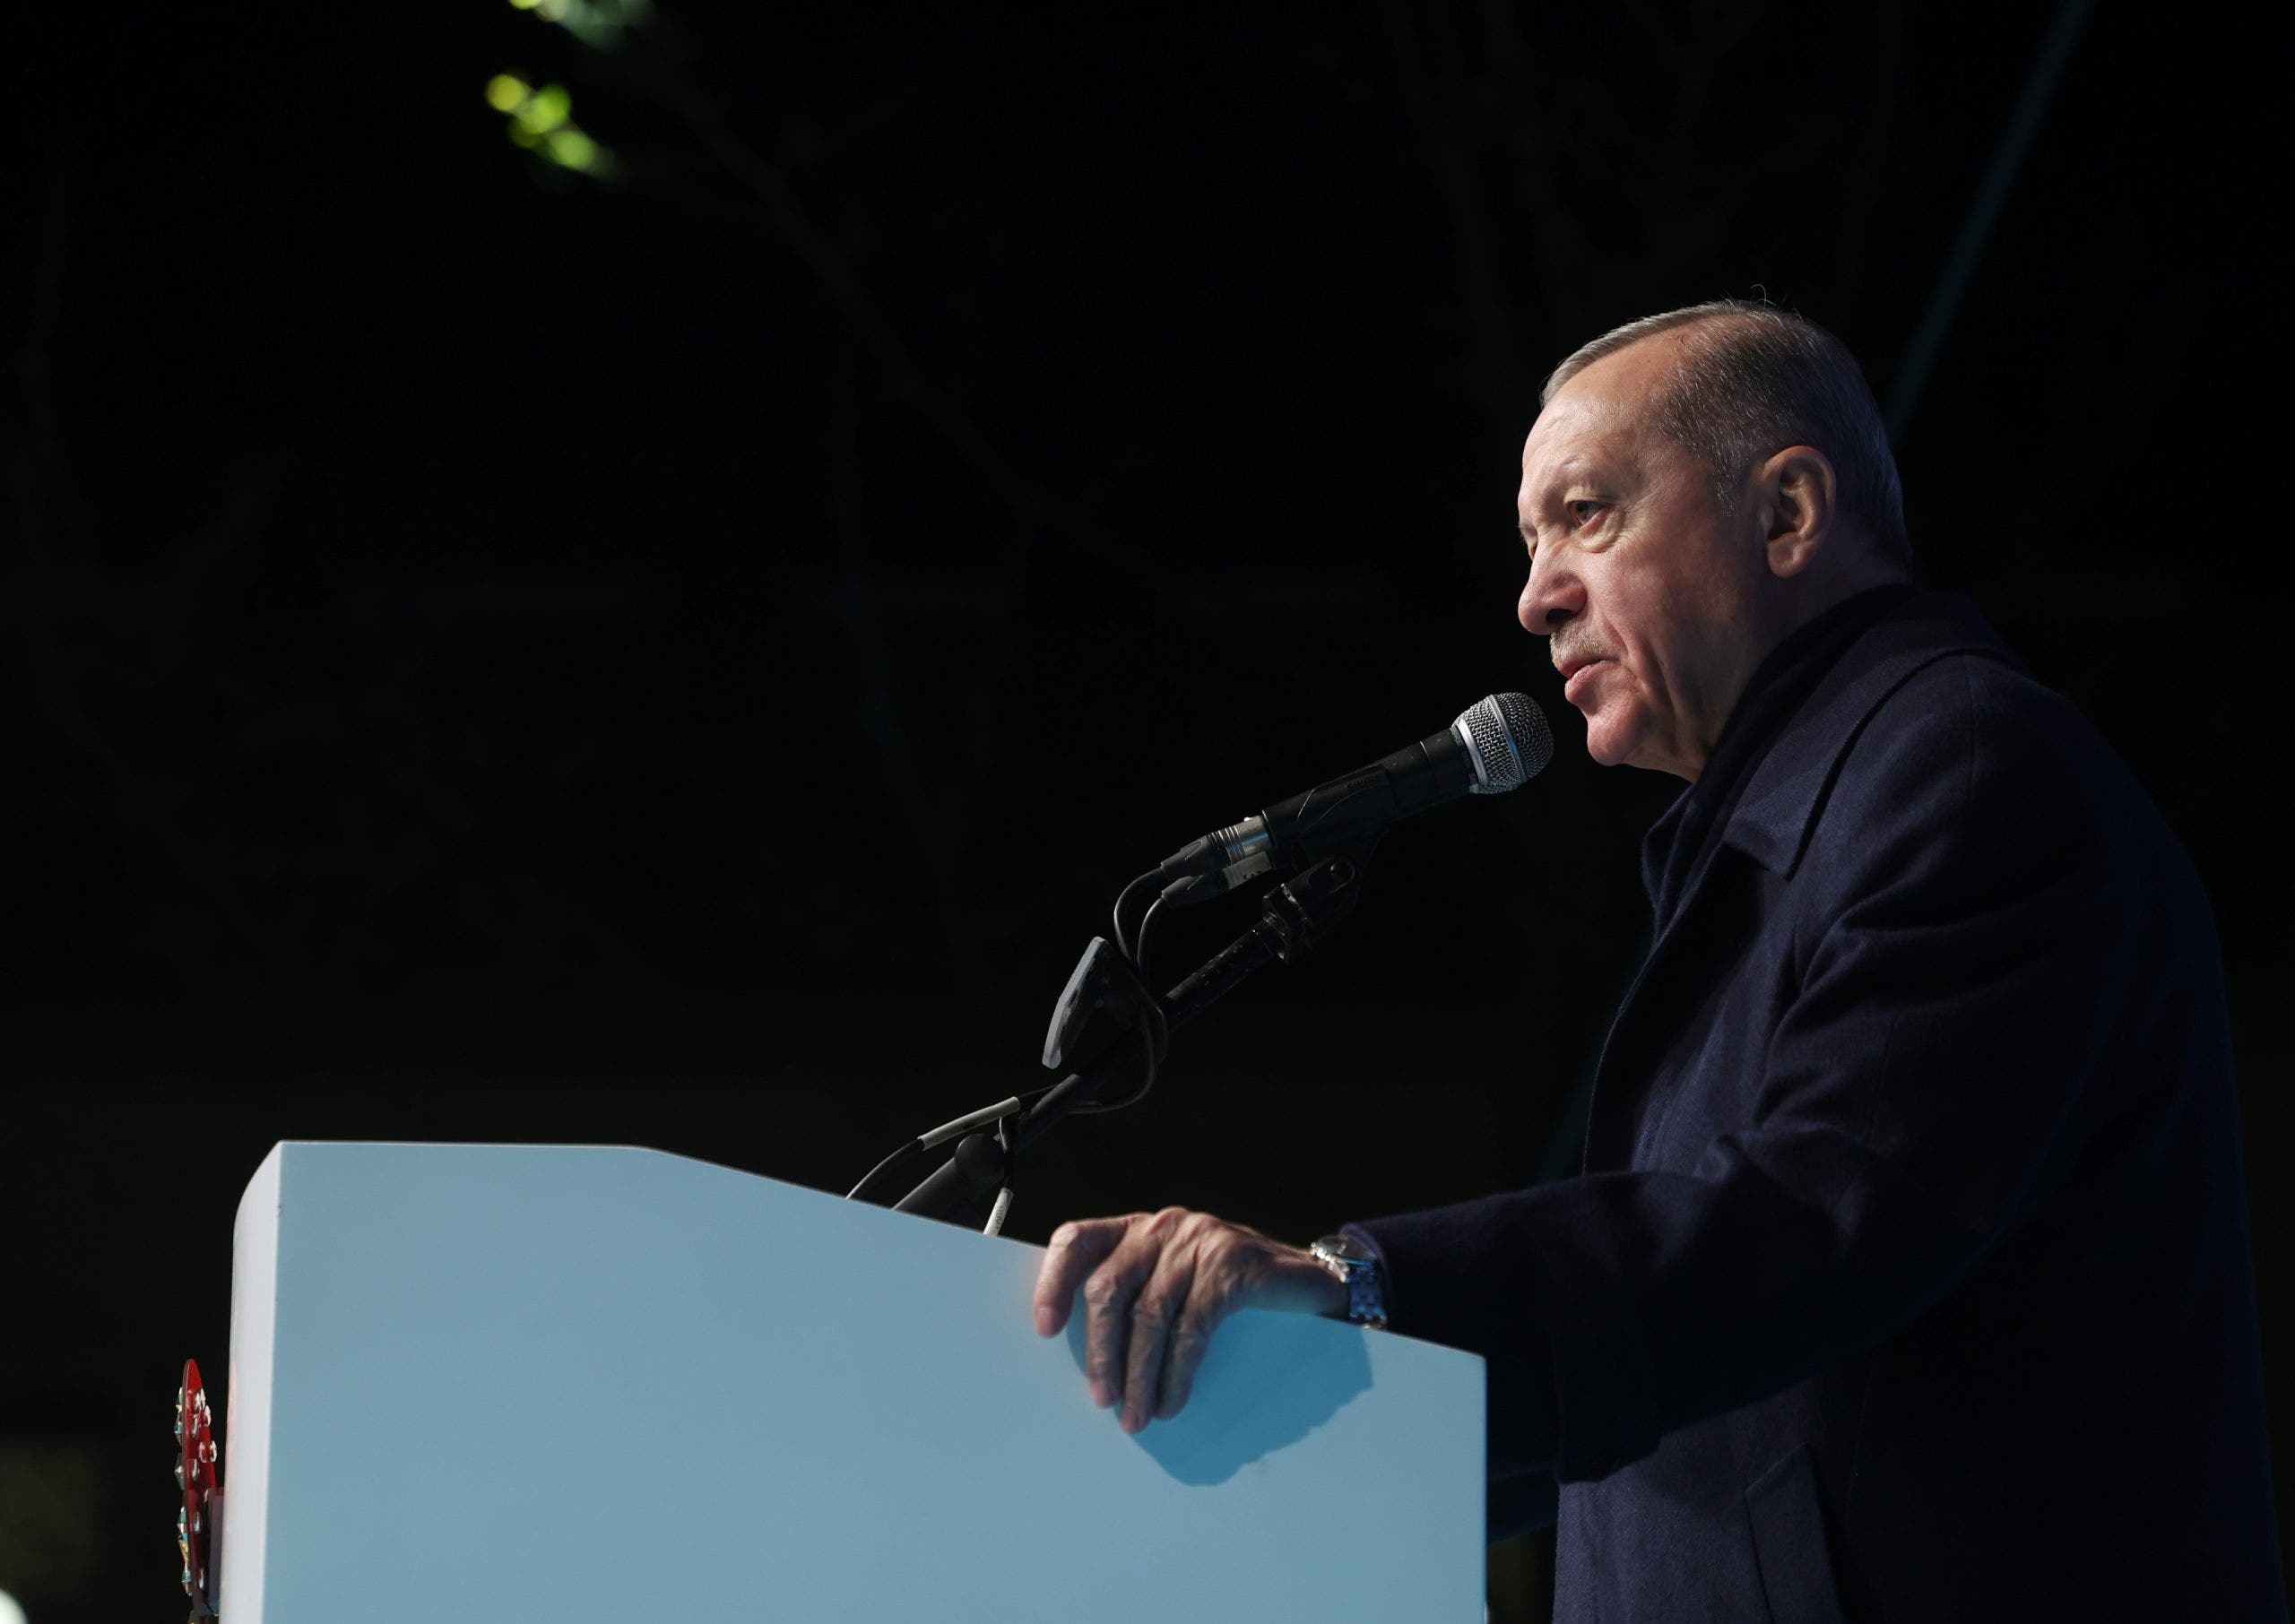 Turkey's Erdogan faces uncertain future after shock election losses expert says